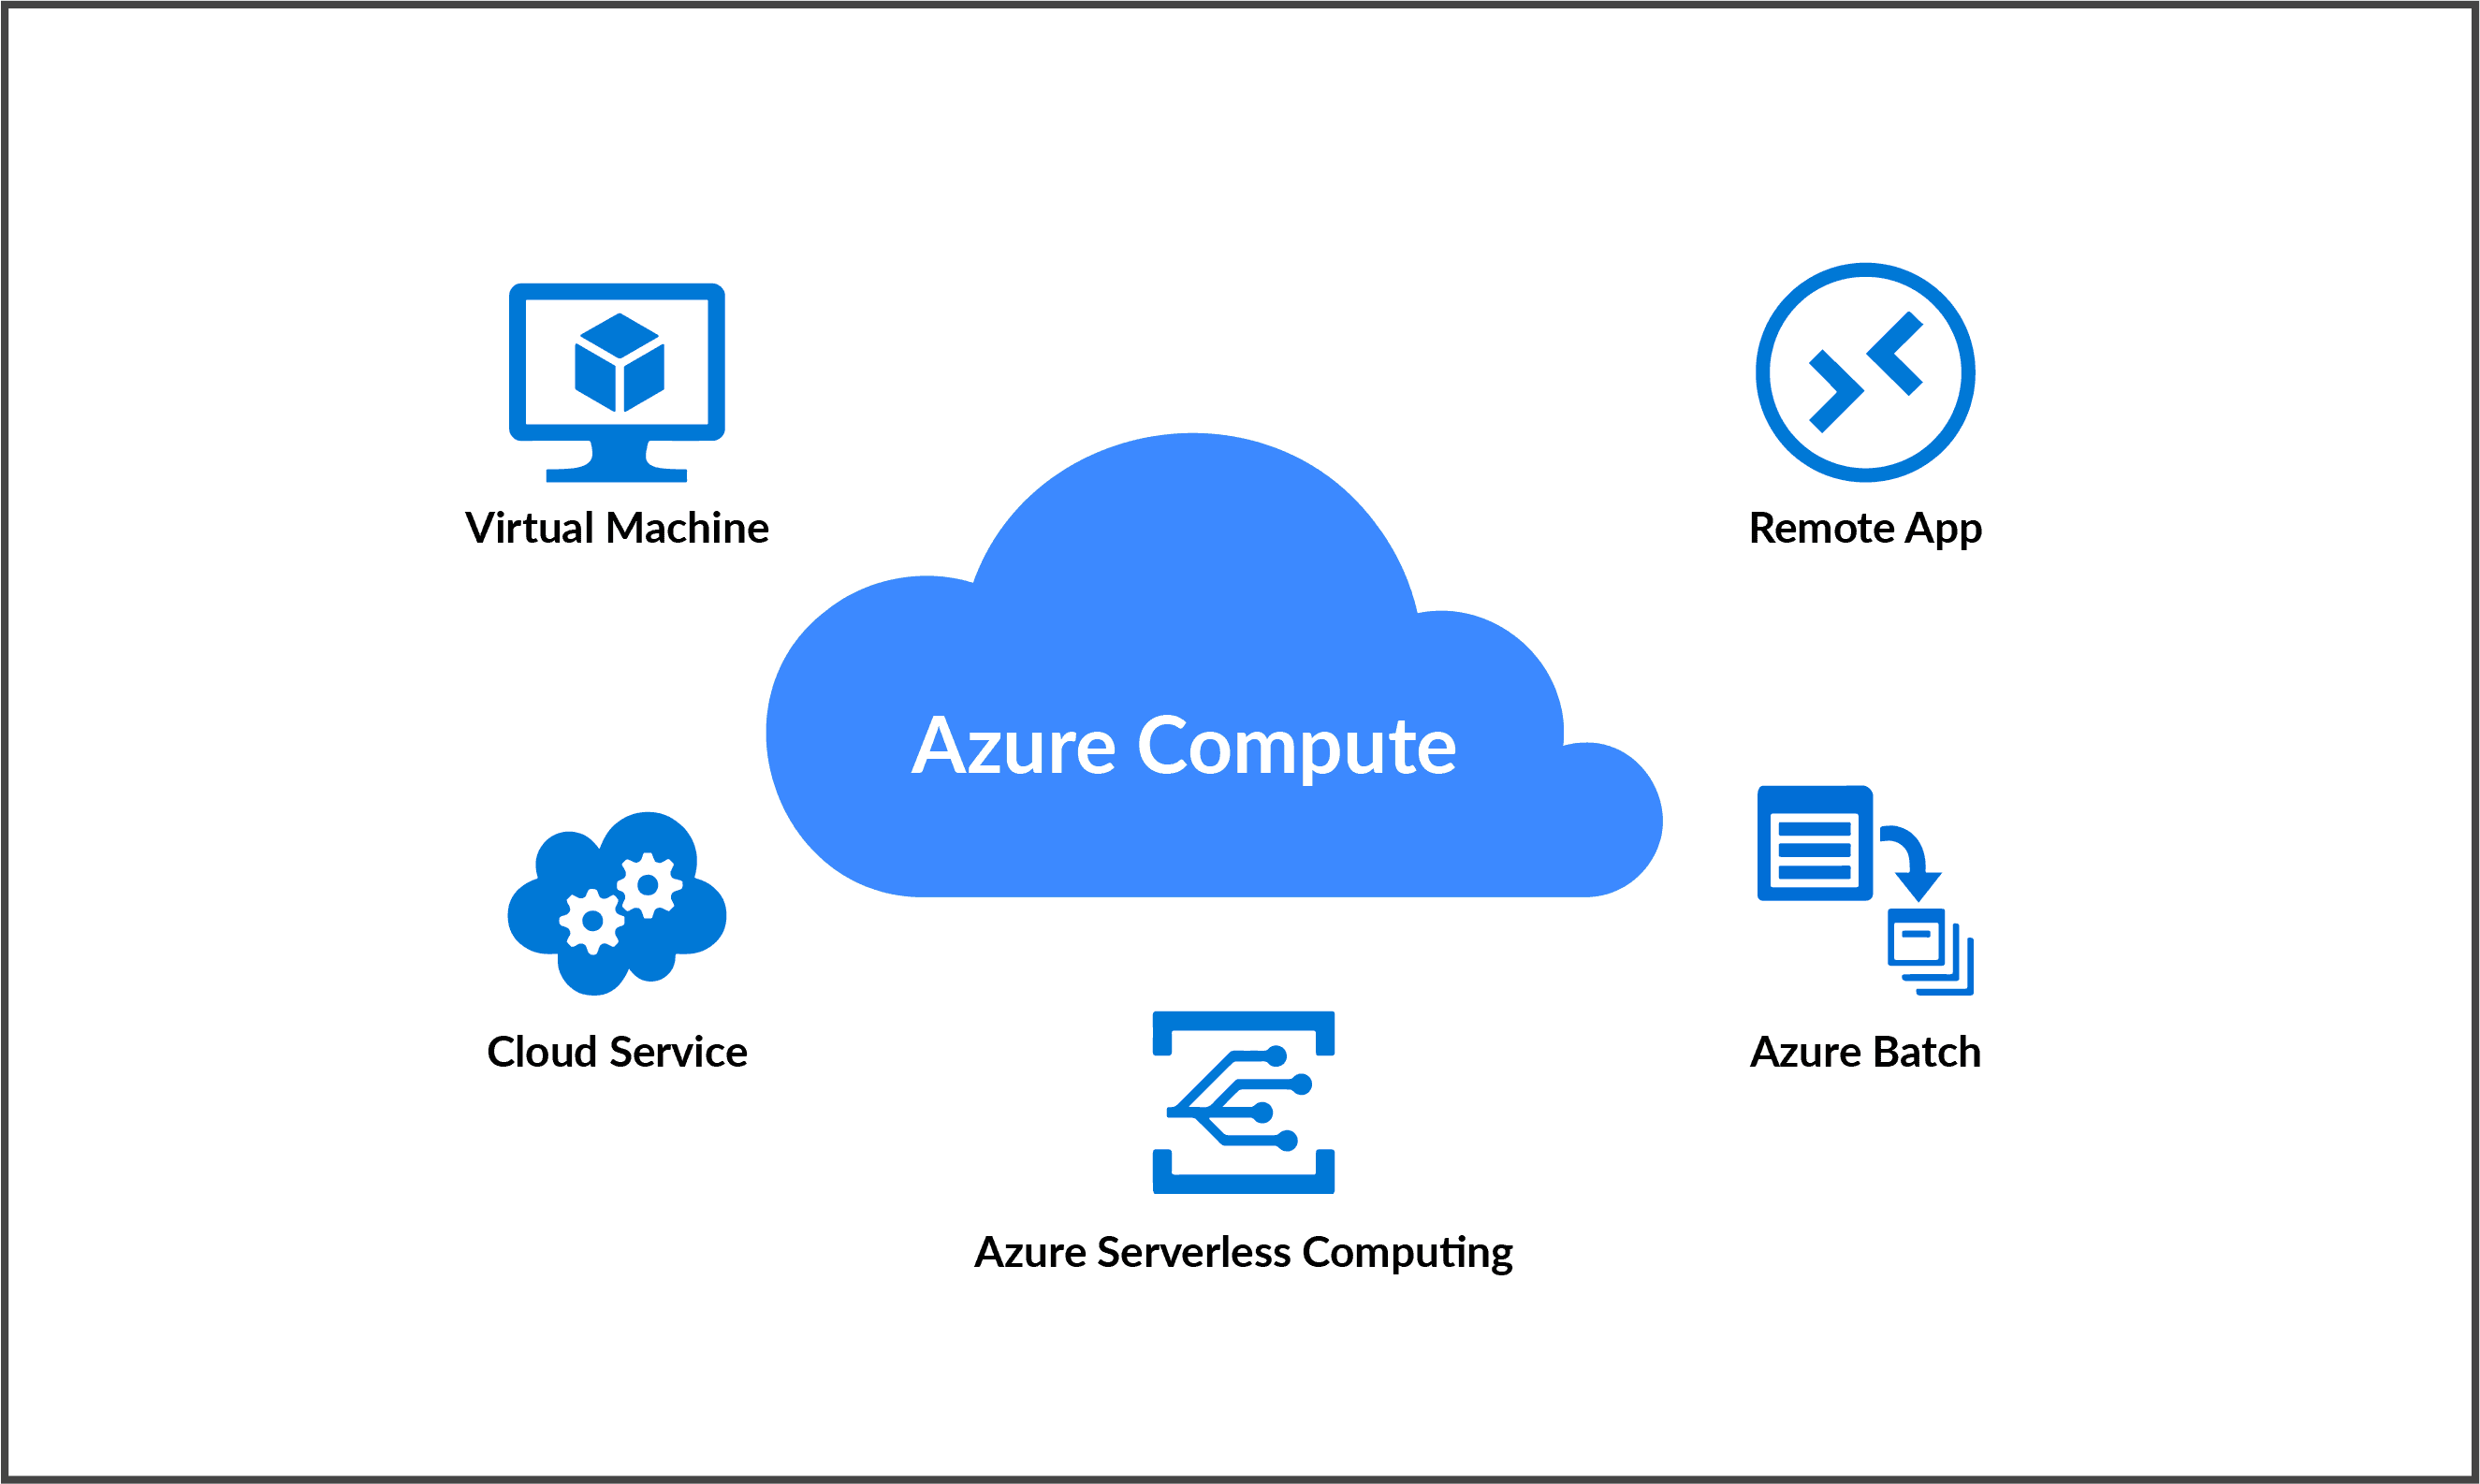 Azure Compute